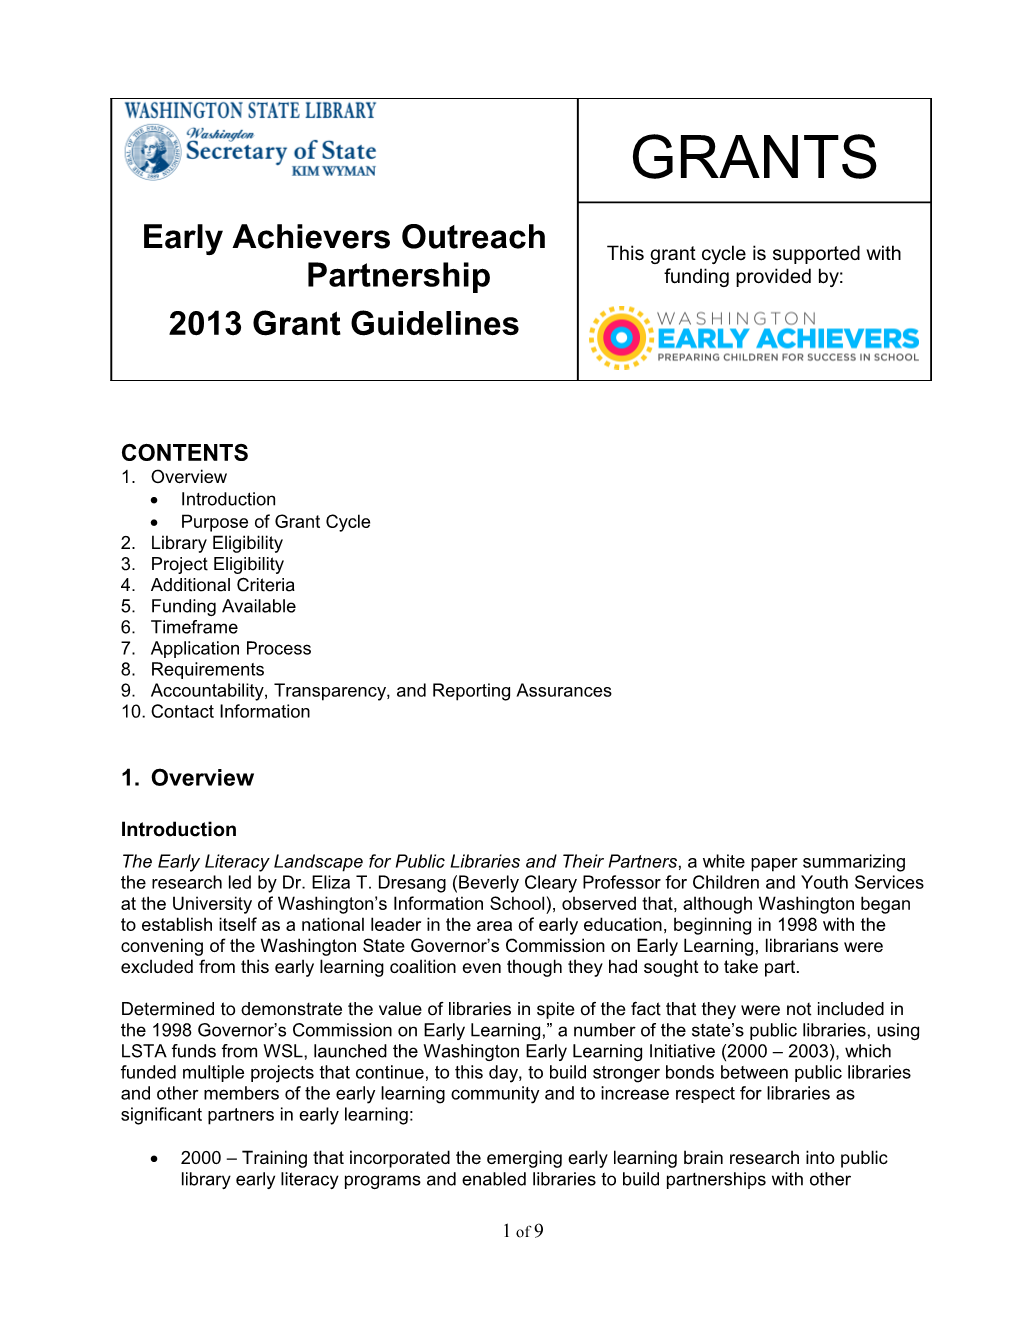 Serving Cultural Diversity 2003 Grant Guidelines